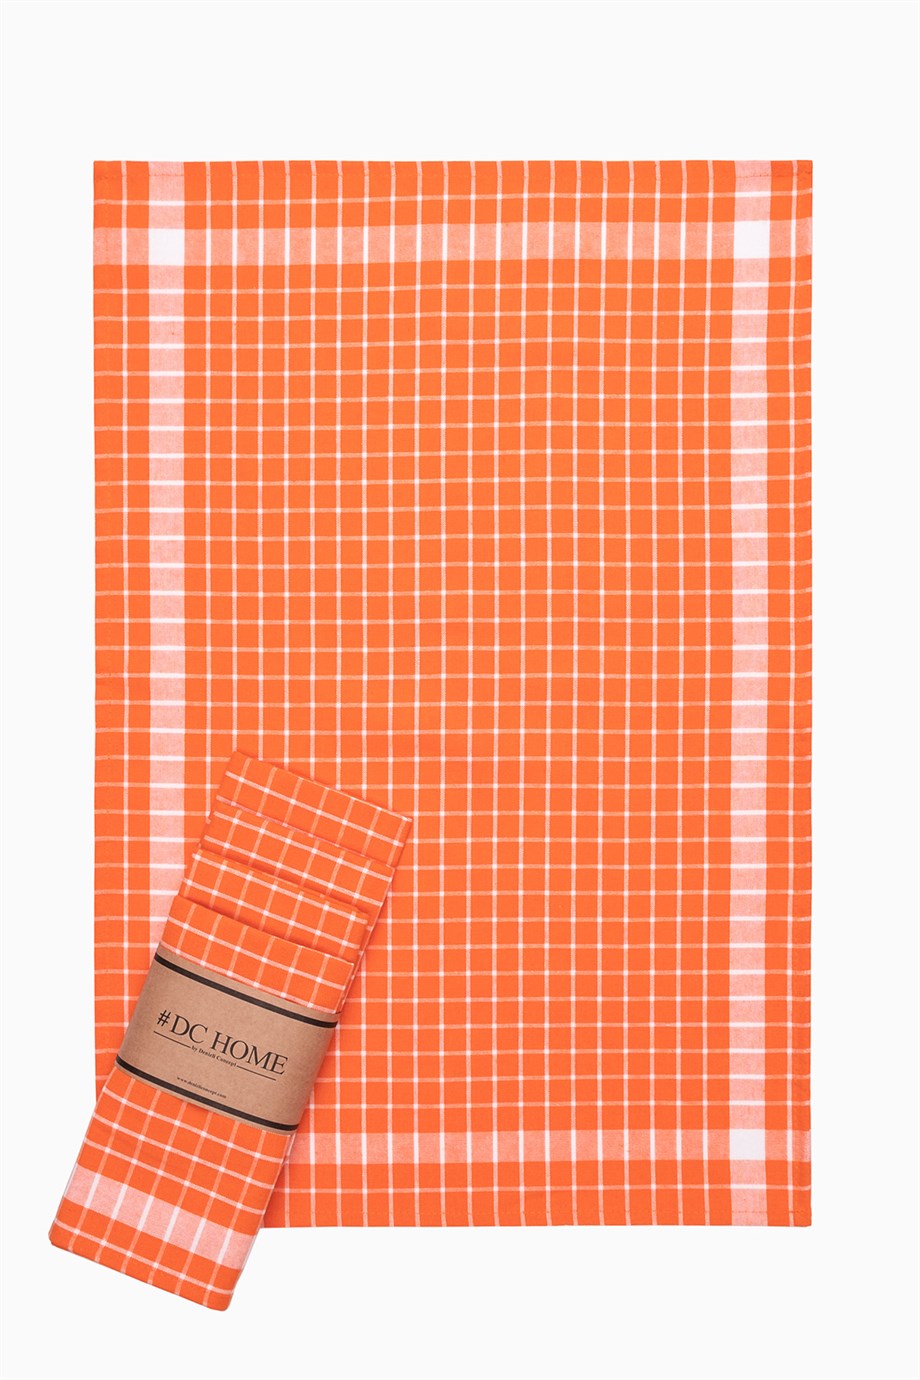 DENIZLI CONCEPT Checkered Tea Towel Orange